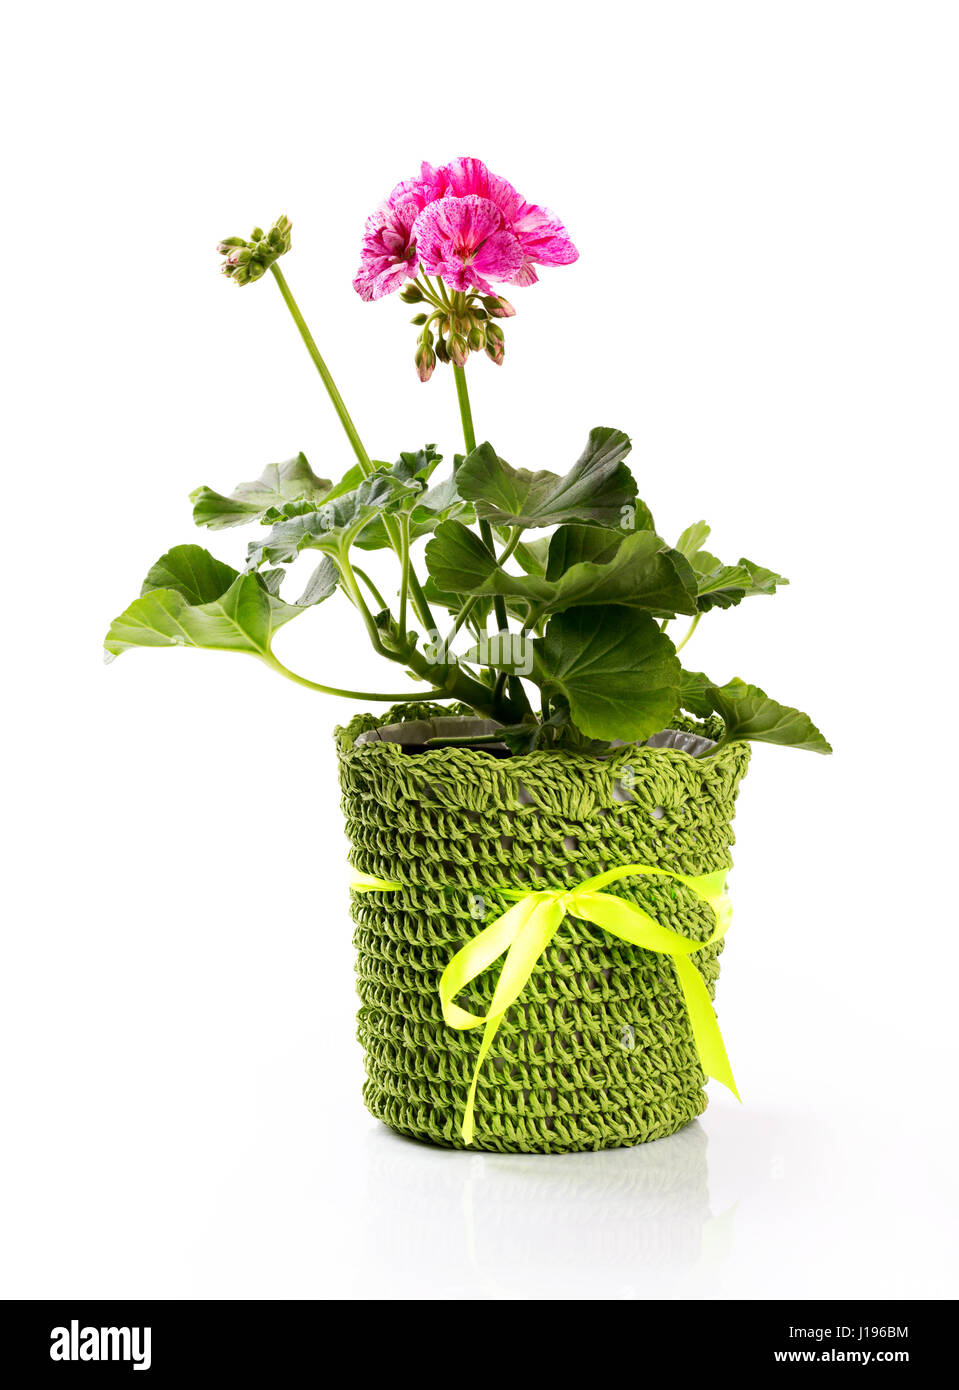 flower pot with pink pelargonium isolated on white Stock Photo